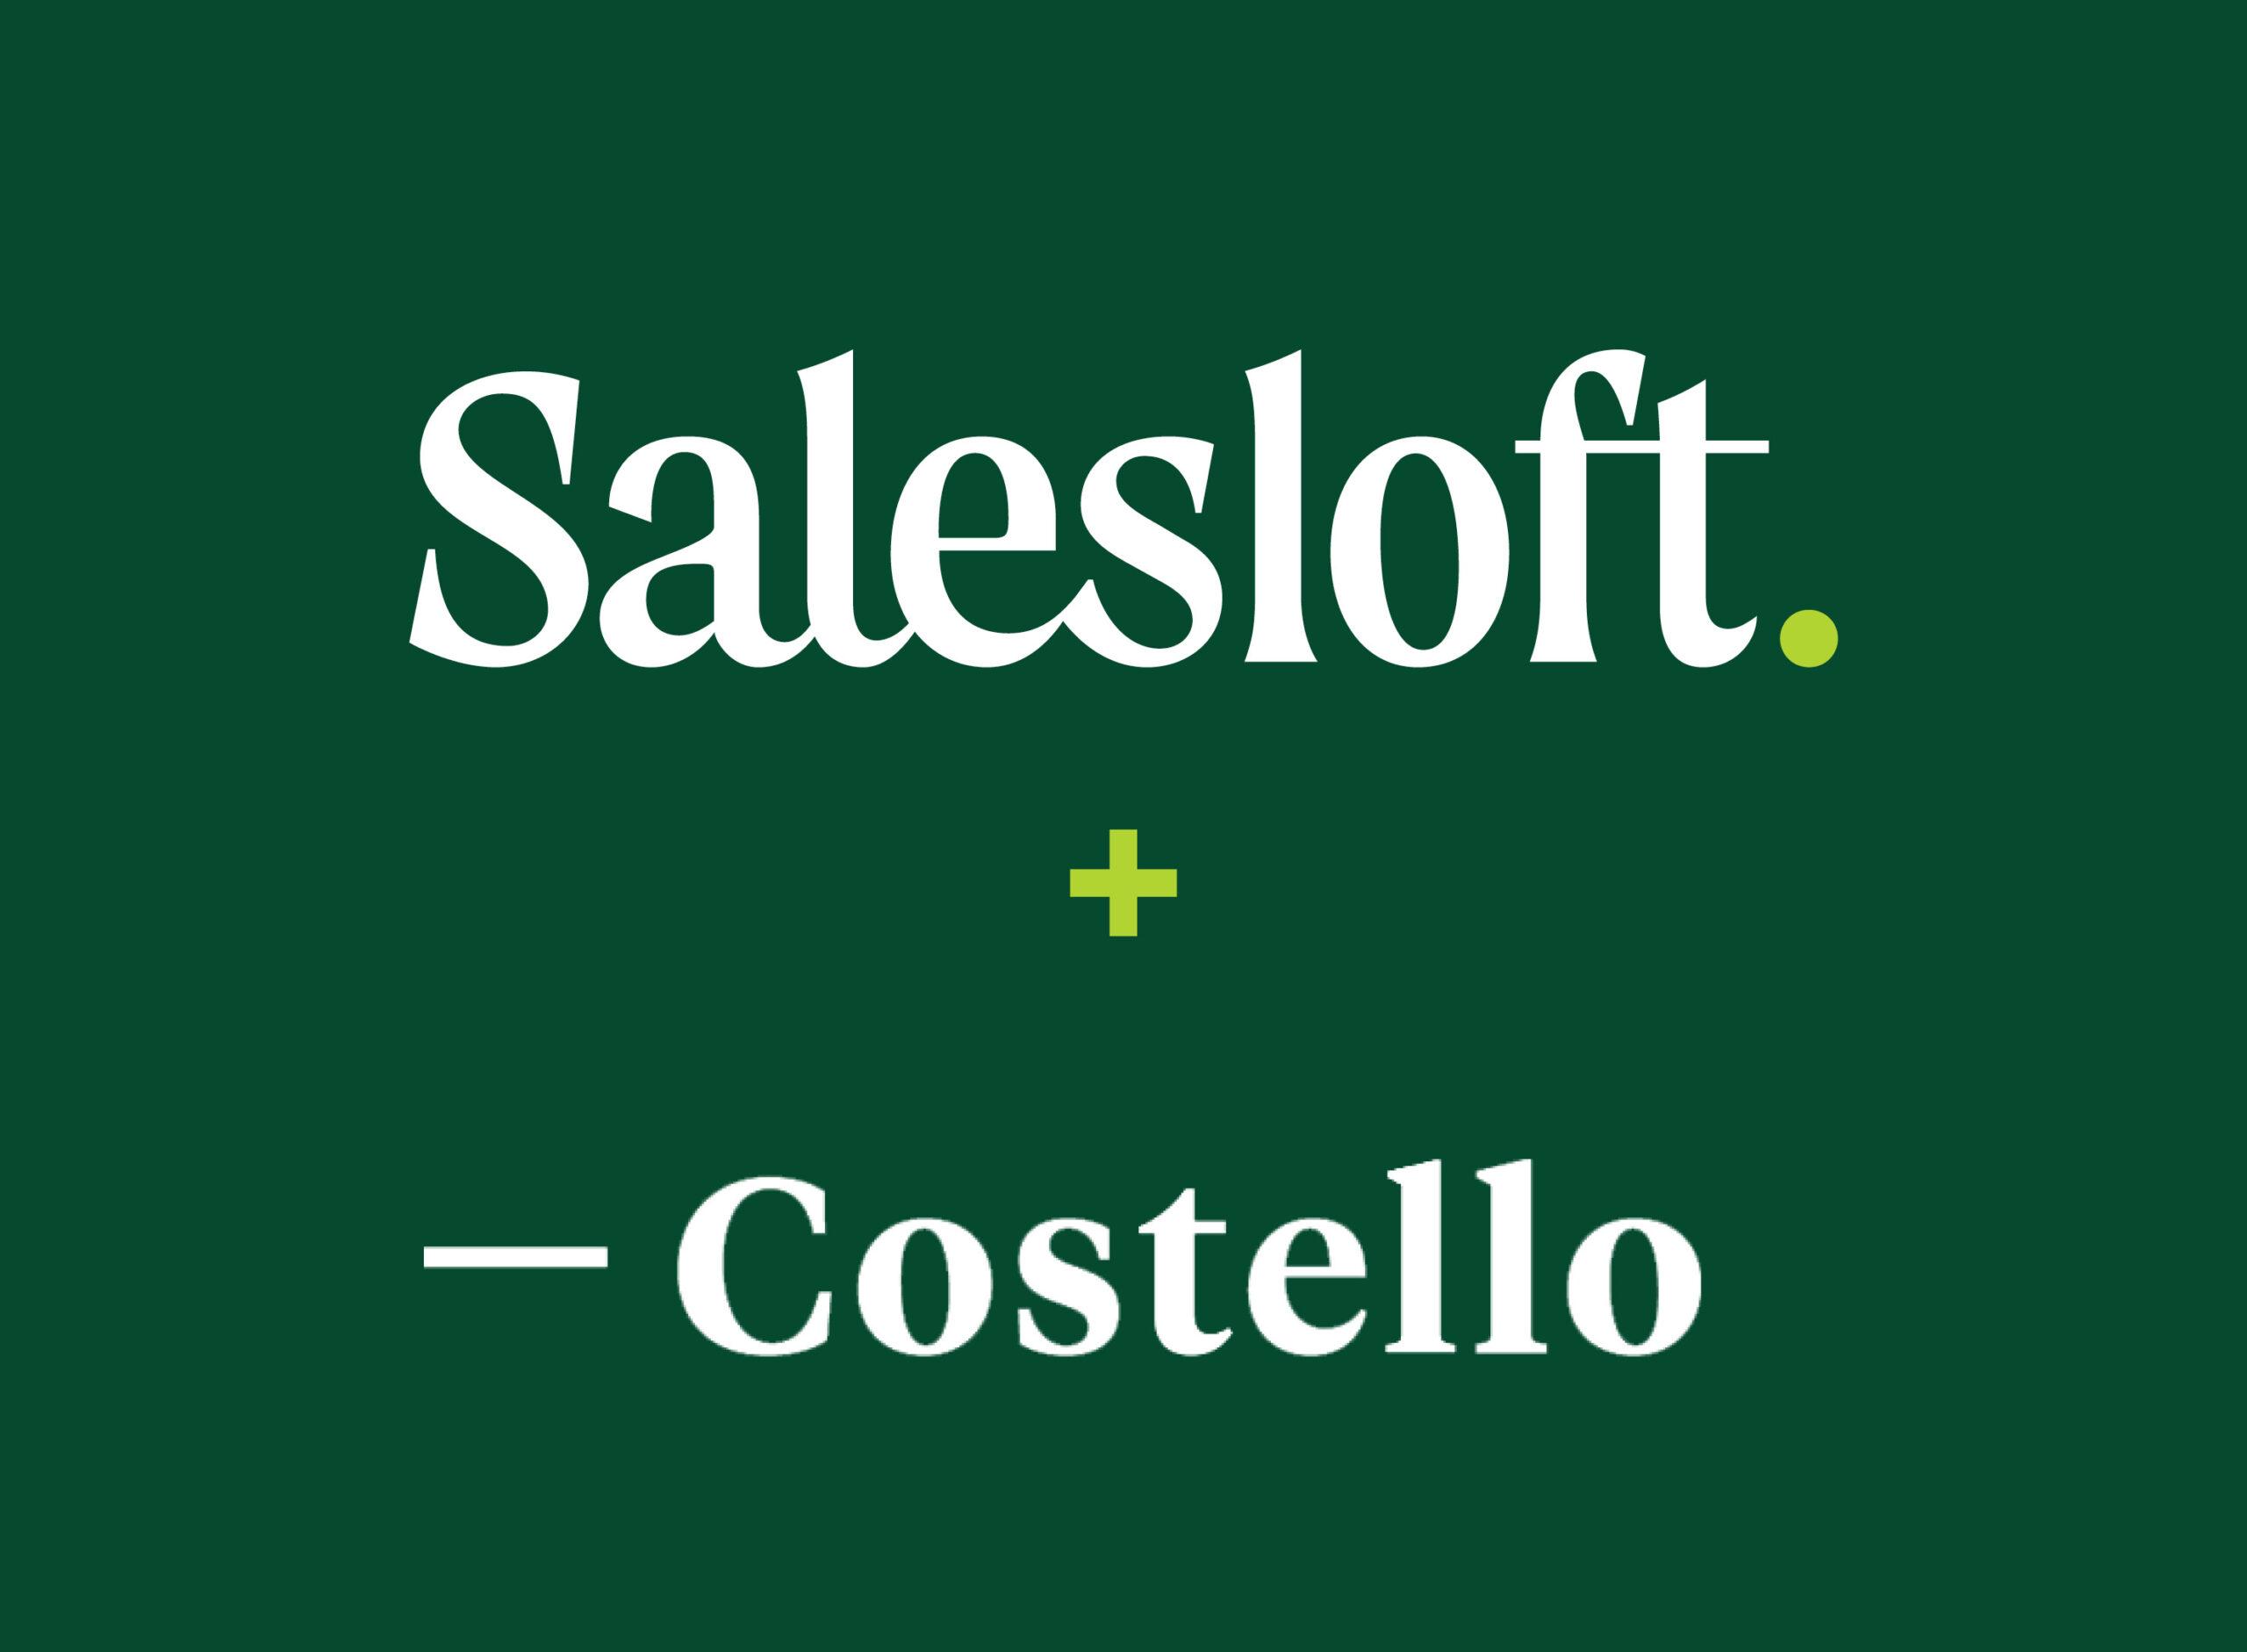 Salesloft and Costello